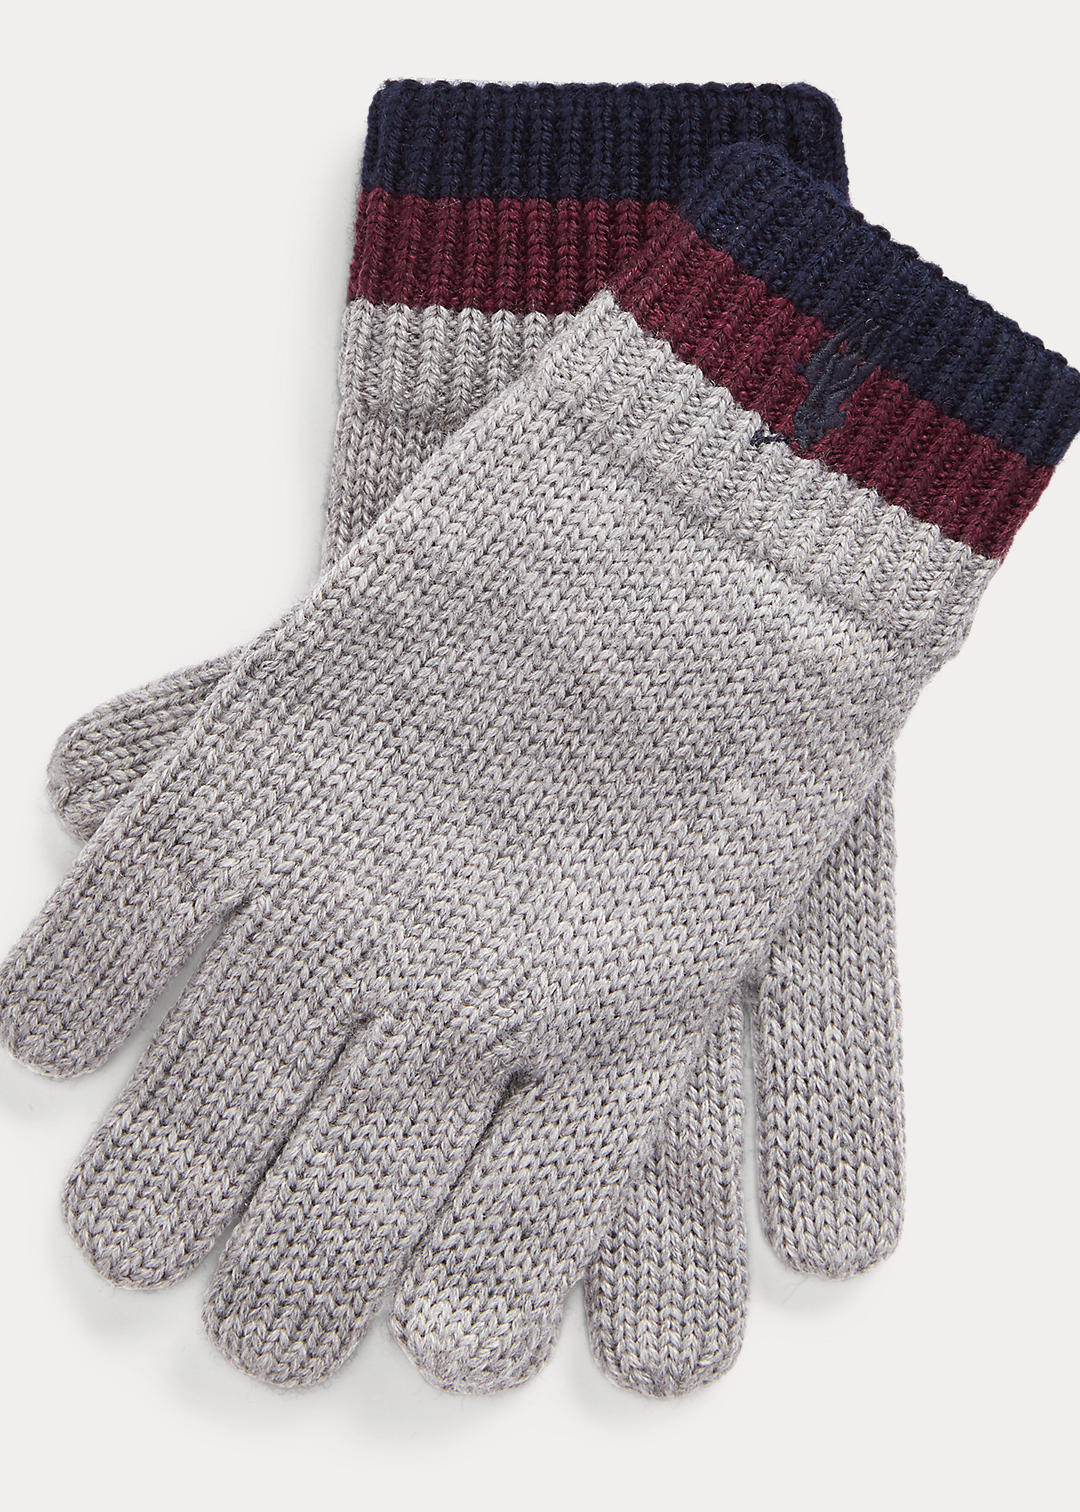 BOYS 1.5-6 YEARS Striped Merino Wool Gloves 1